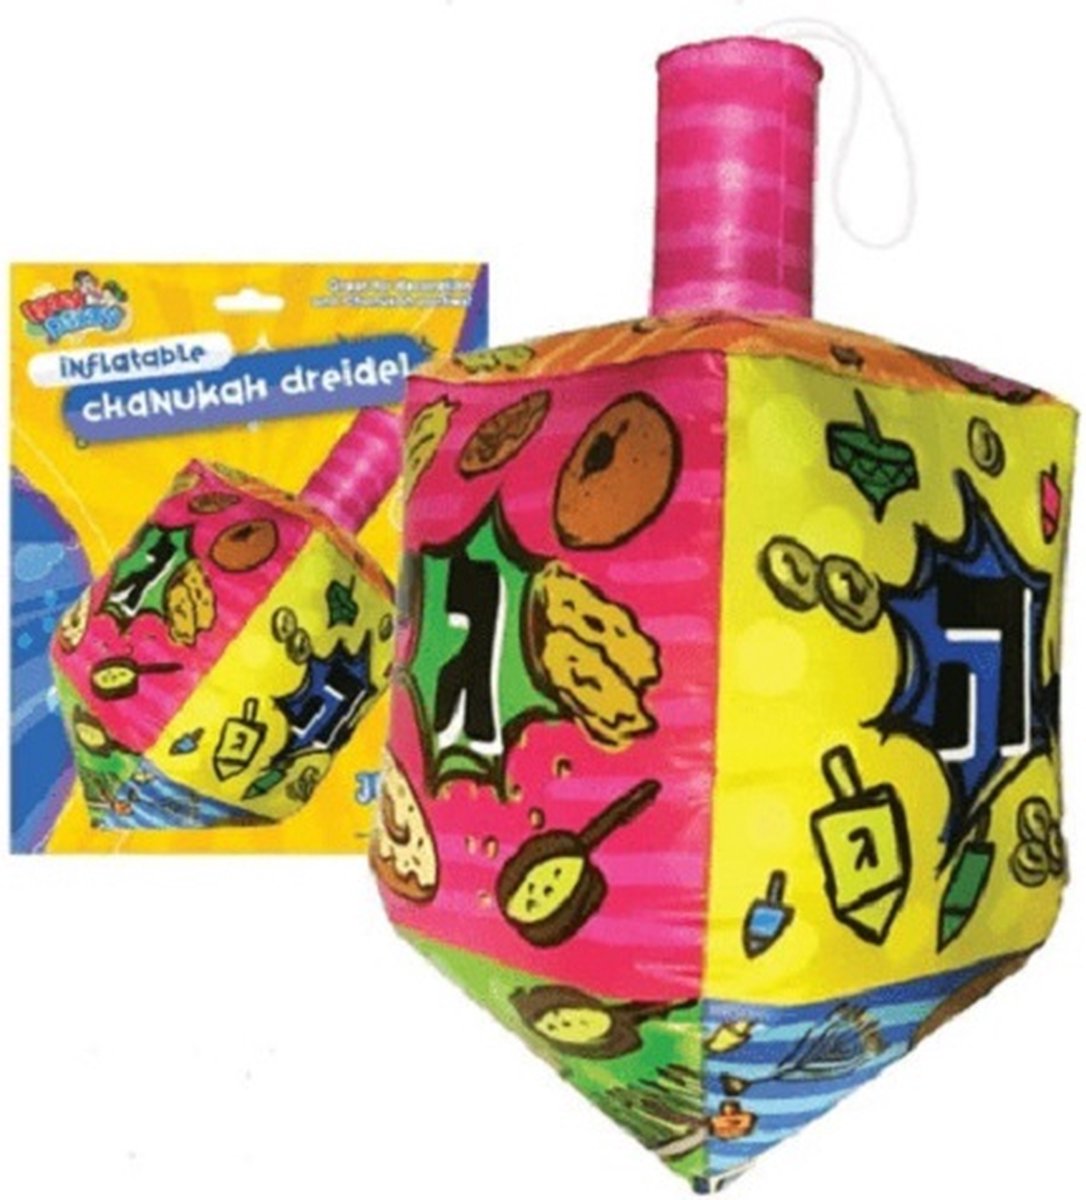 Inflatable Chanukah Dreidel